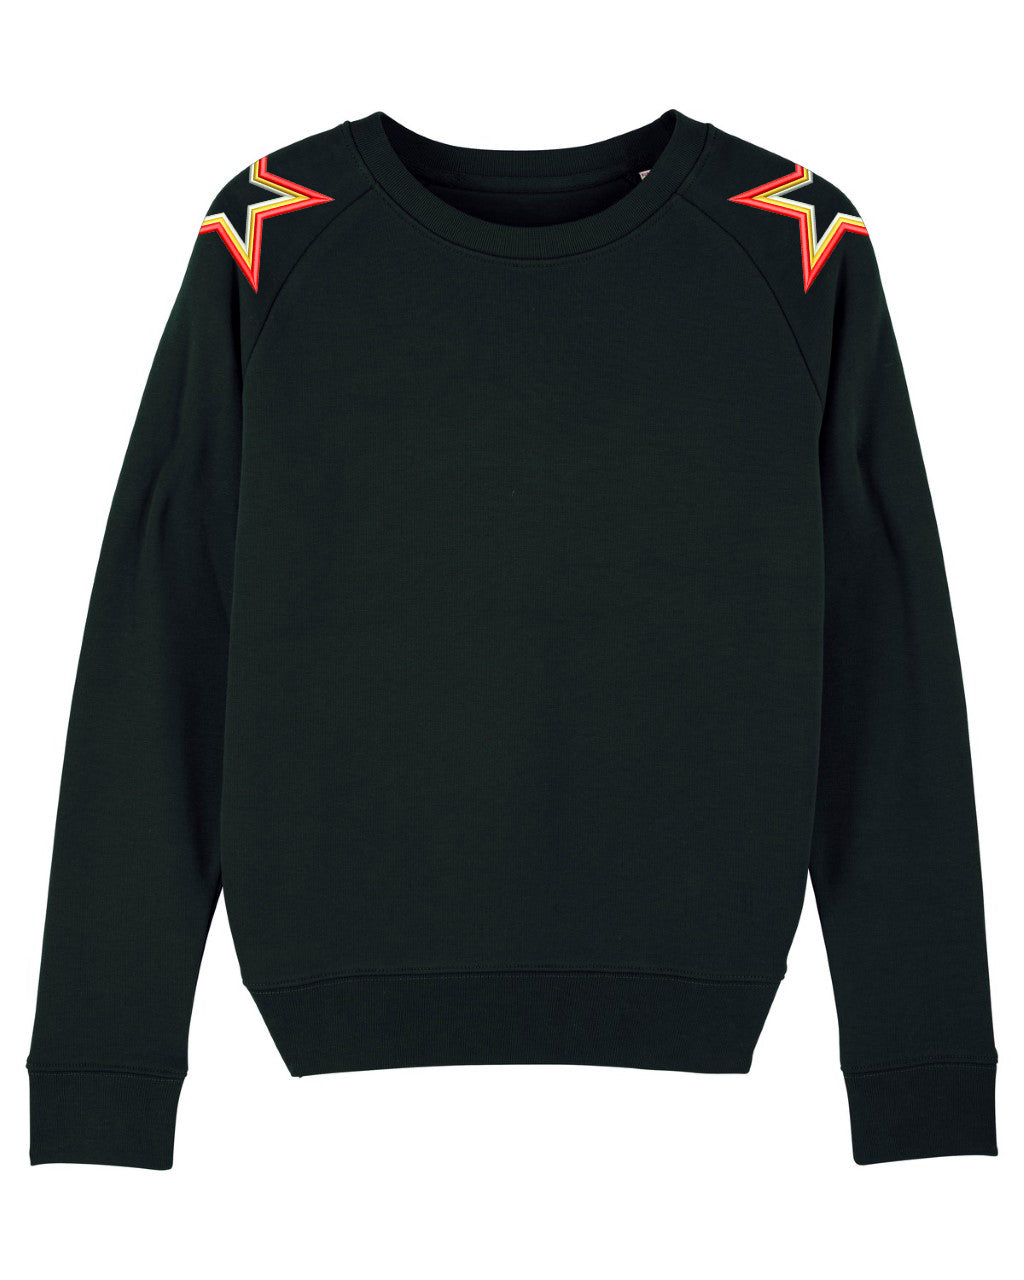 Black Shoulder Star Sweatshirt